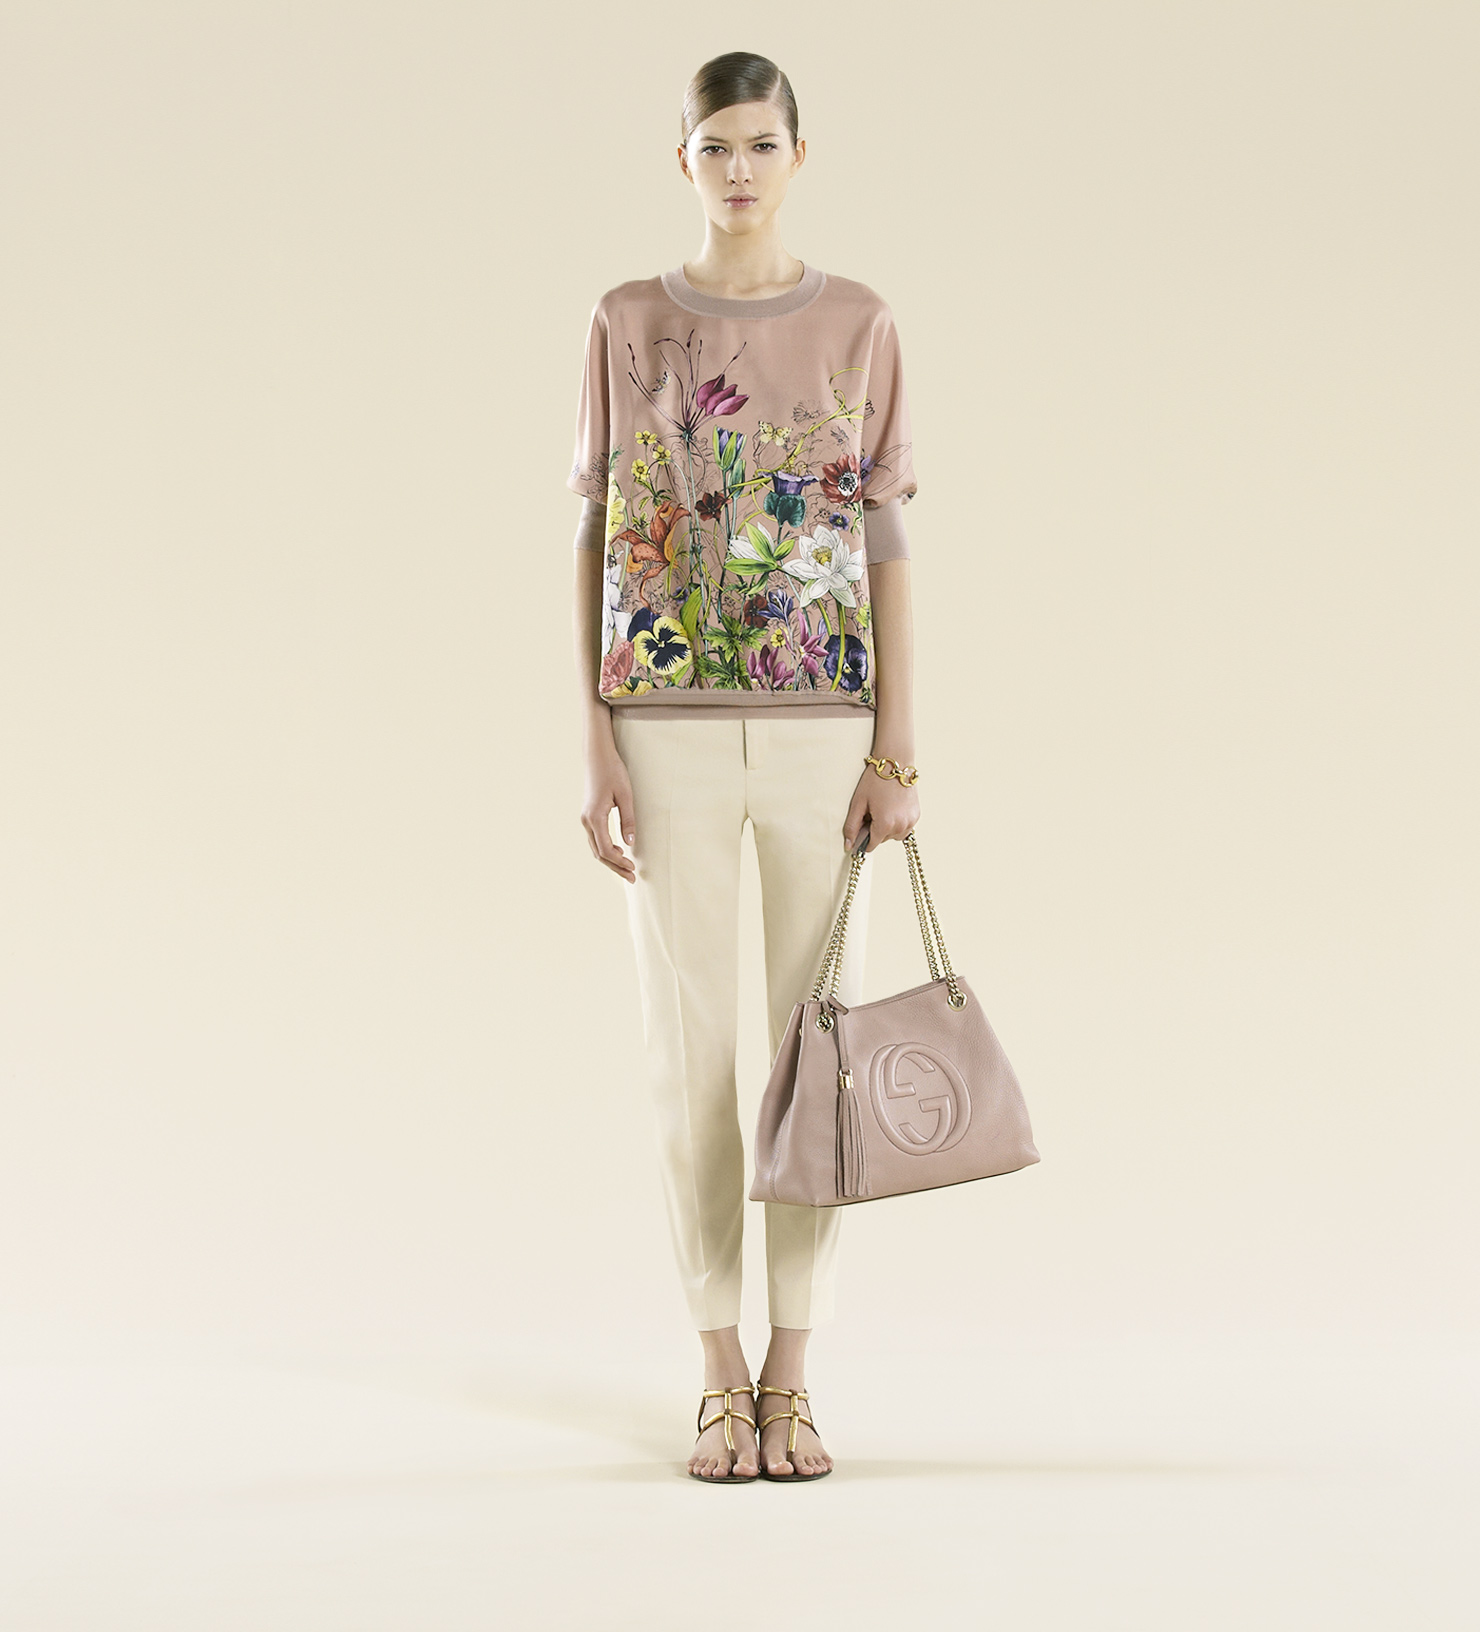 Lyst - Gucci Soho Leather Shoulder Bag in Pink